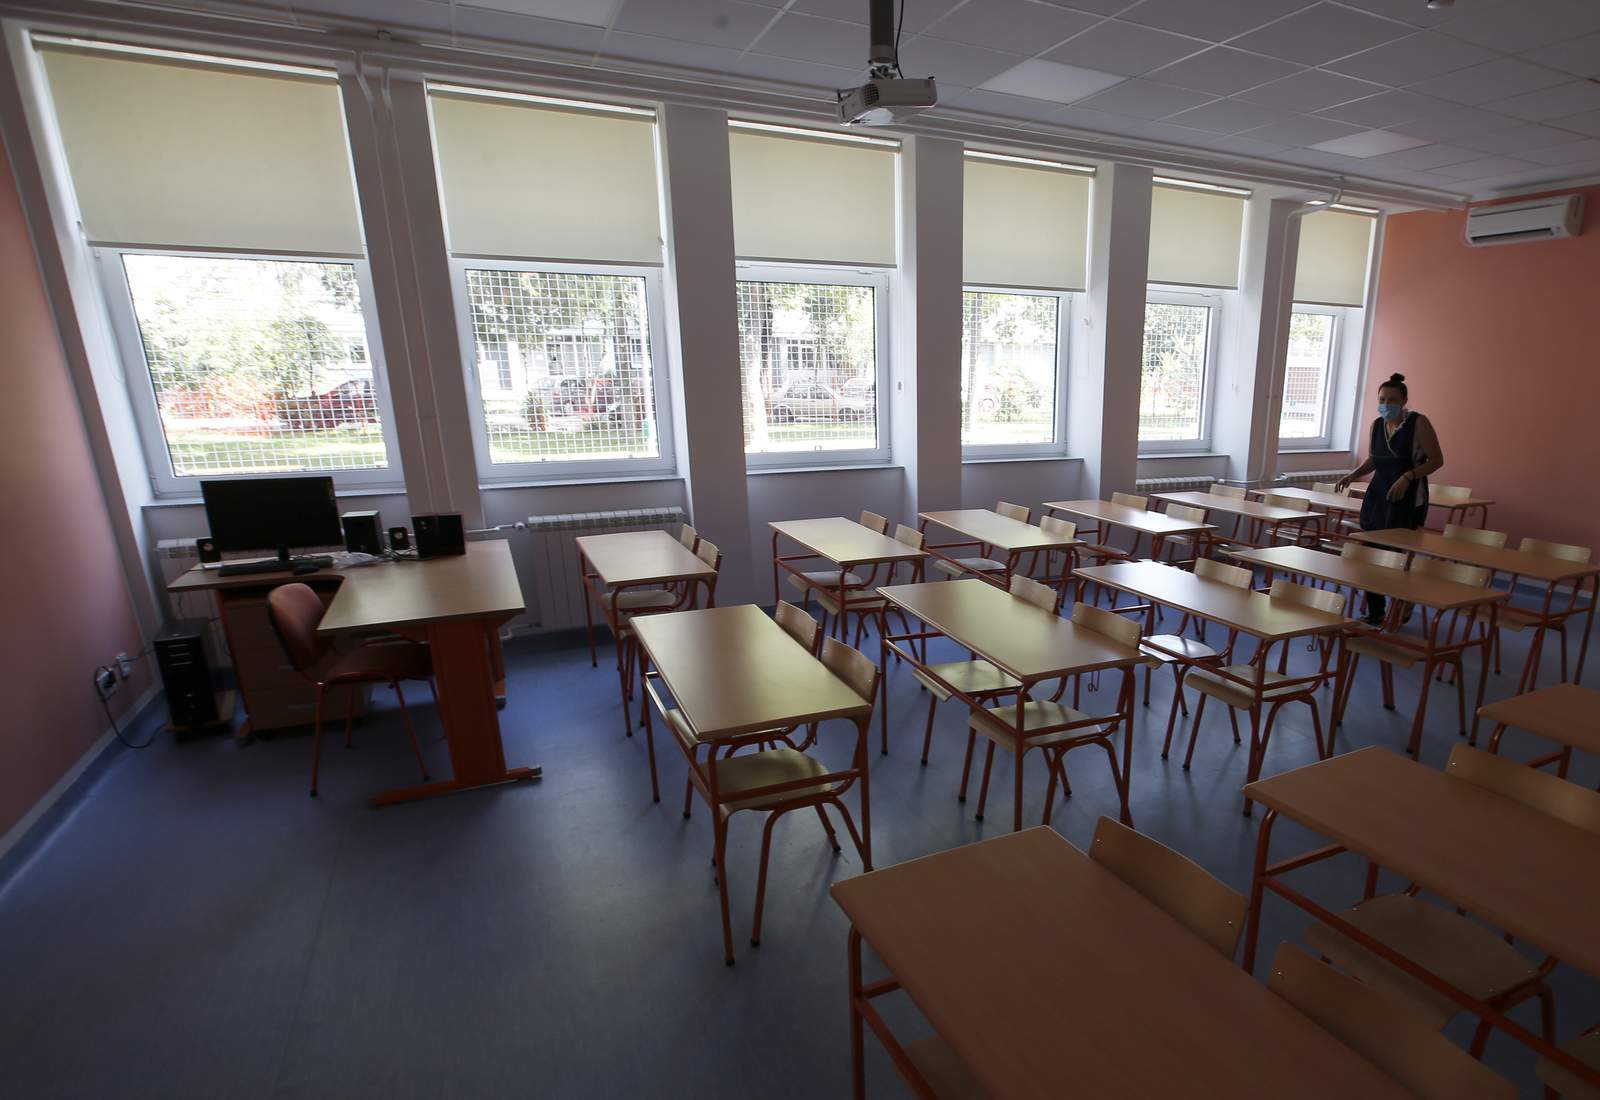 14 Merritt Island High School students in quarantine due to reported COVID-19 case